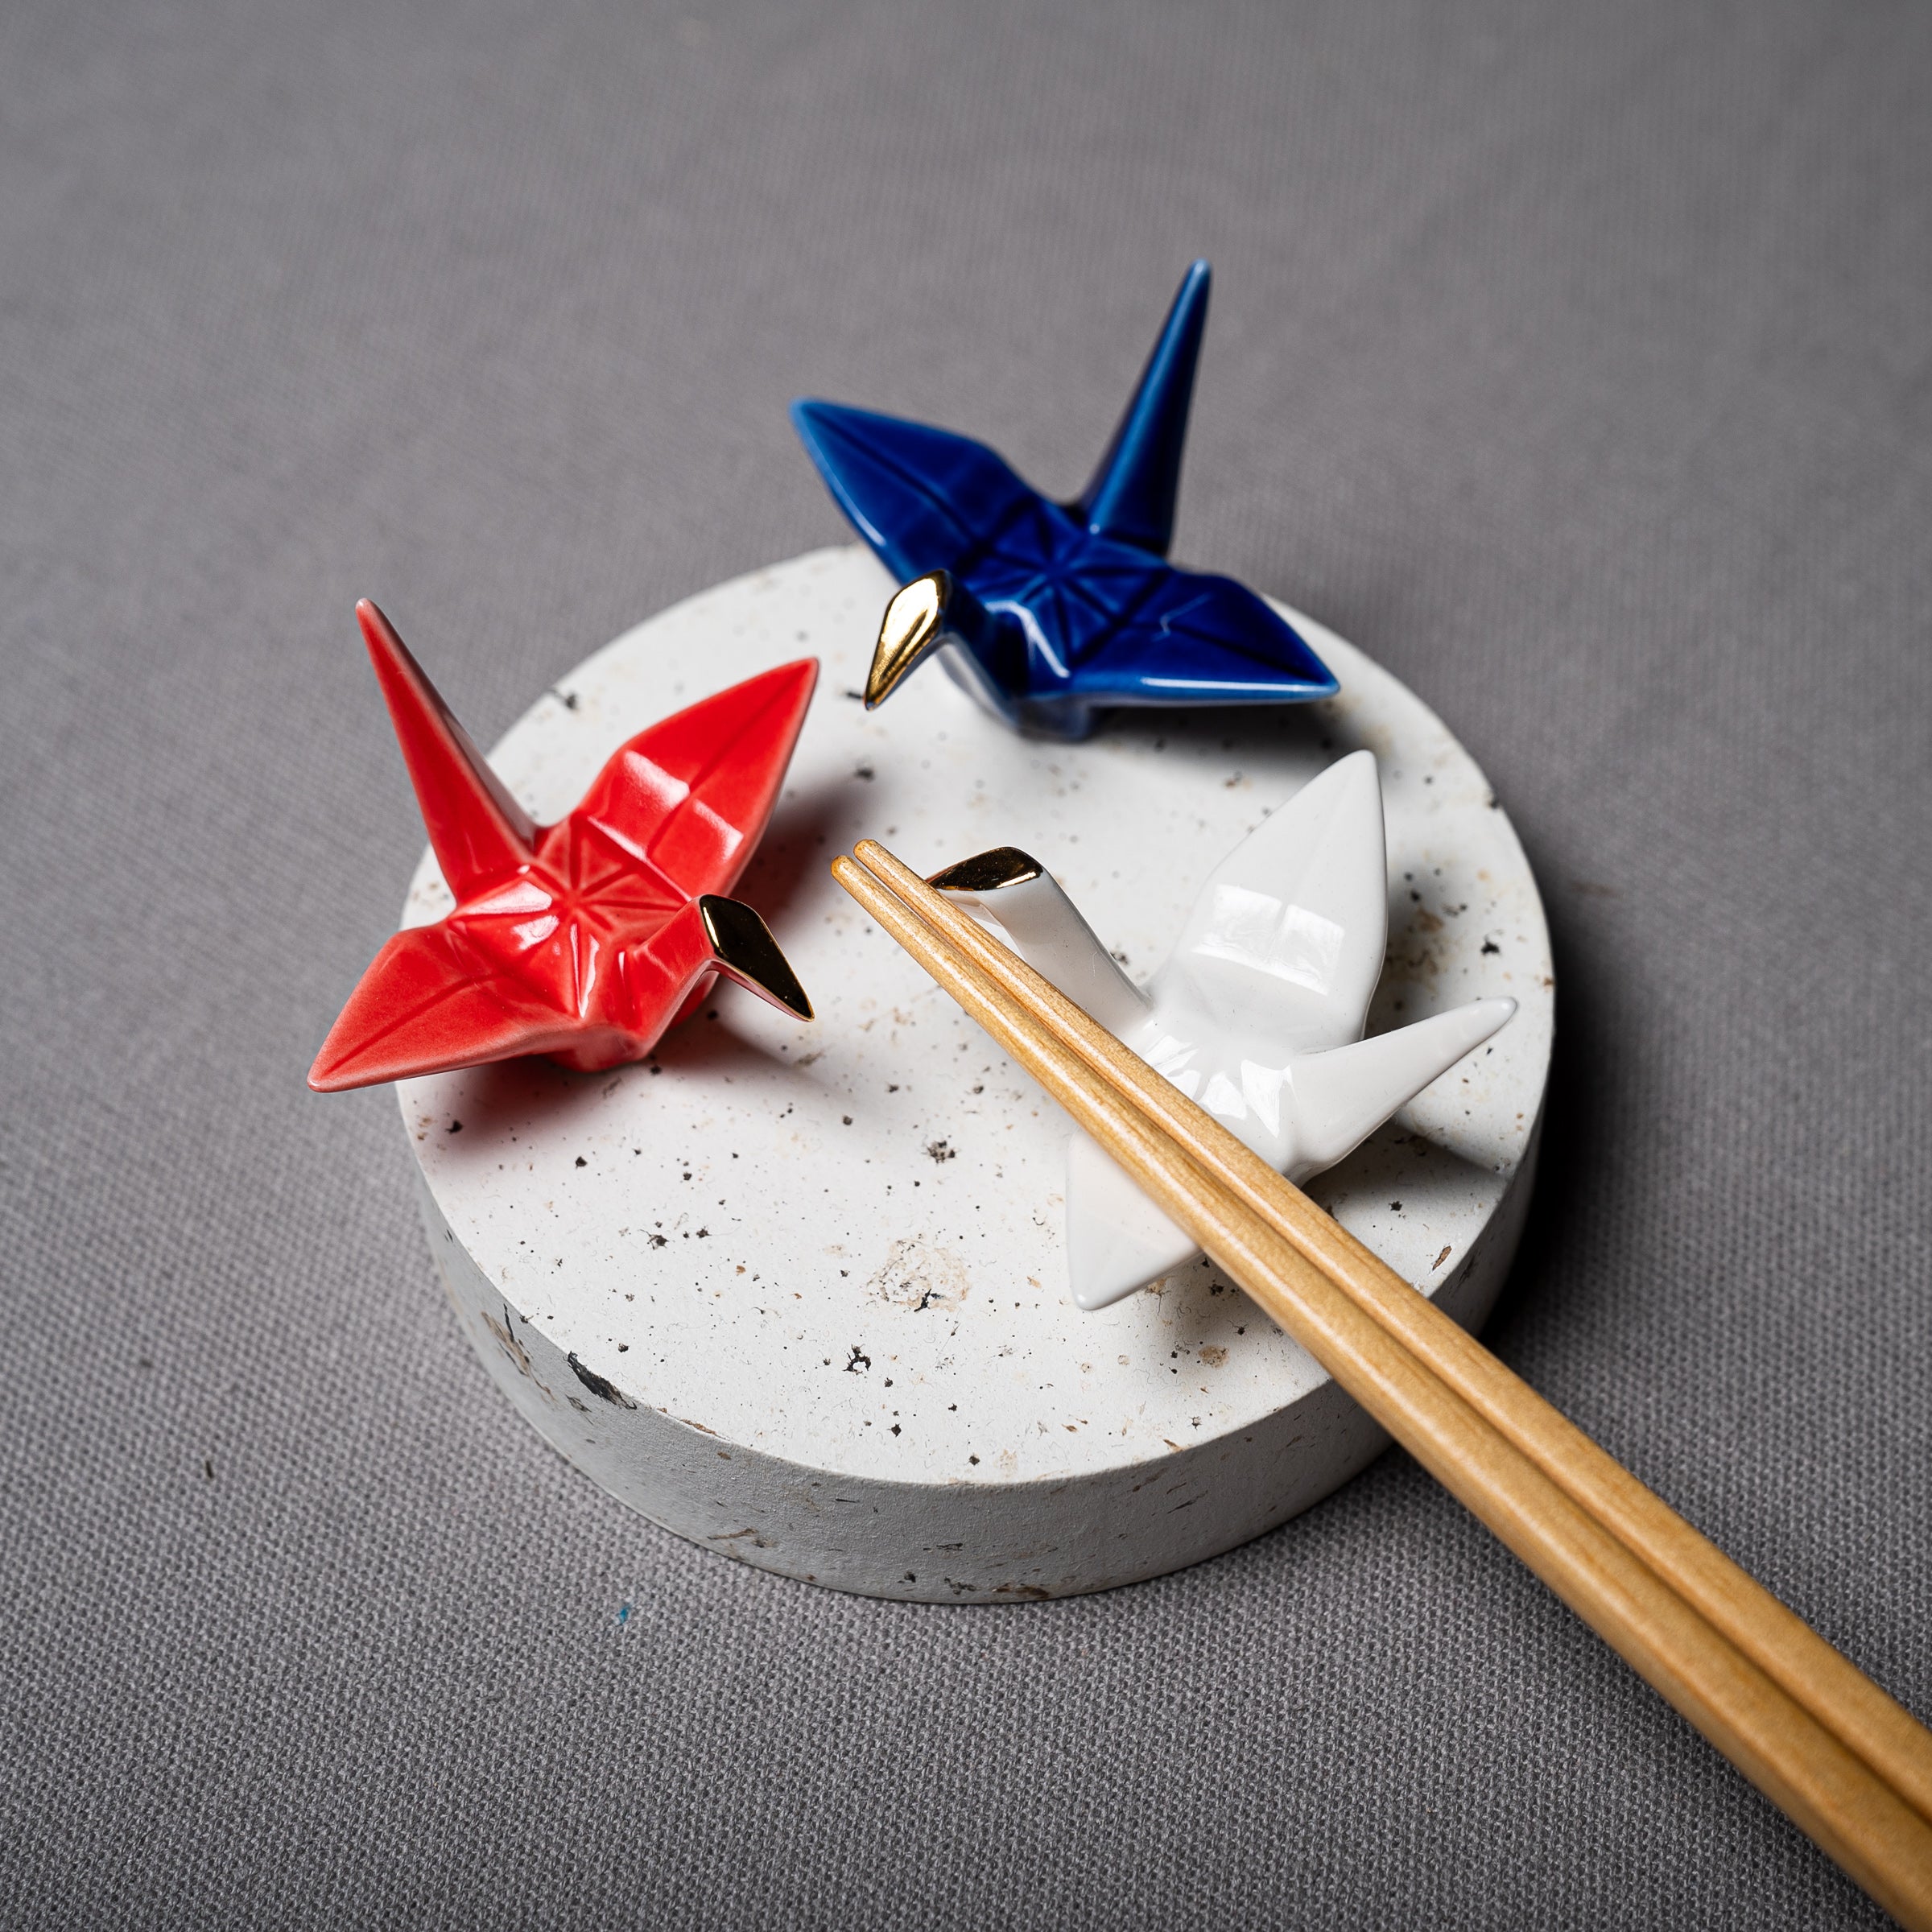 Arita Orizuru Chopstick Rest Gift Set - 3pcs / 有田焼 折り鶴箸置き ギフト